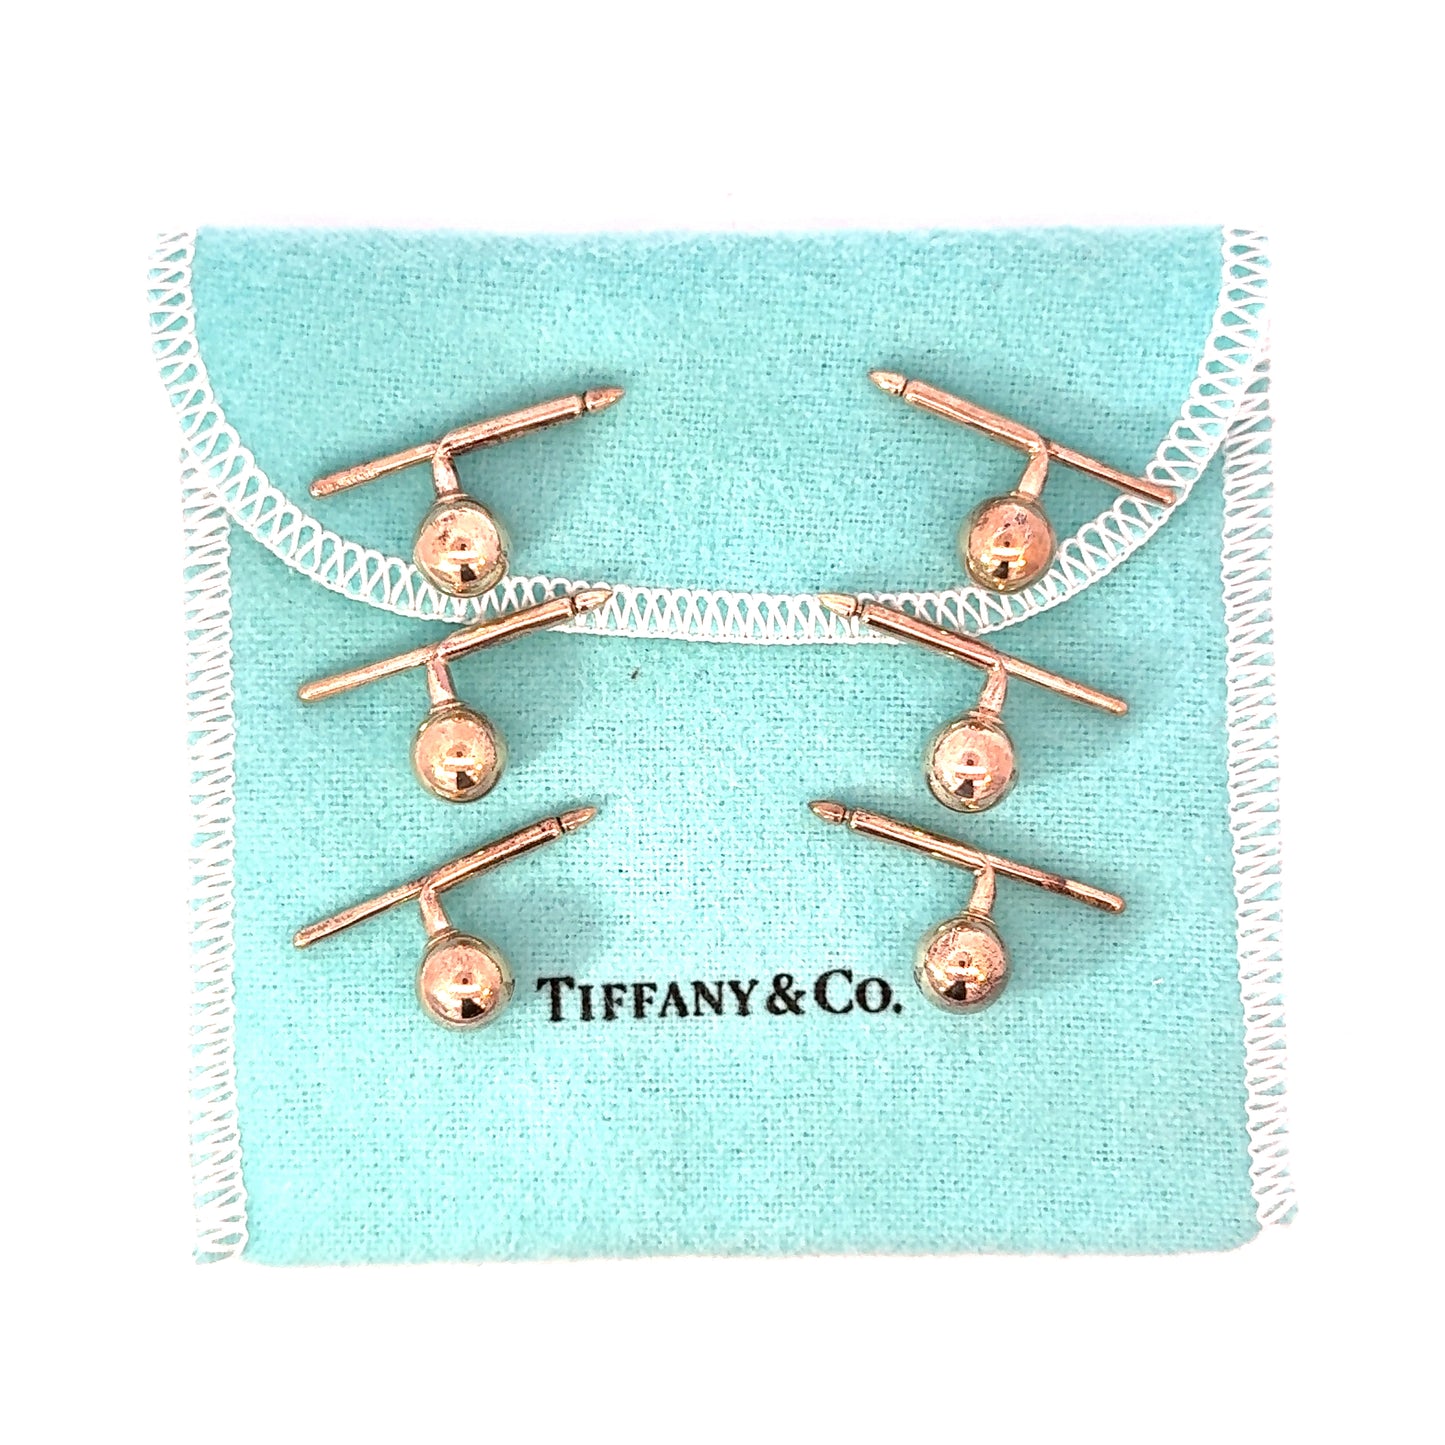 Tiffany & Co. Vintage Ball Cuff Links/Shirt Studs